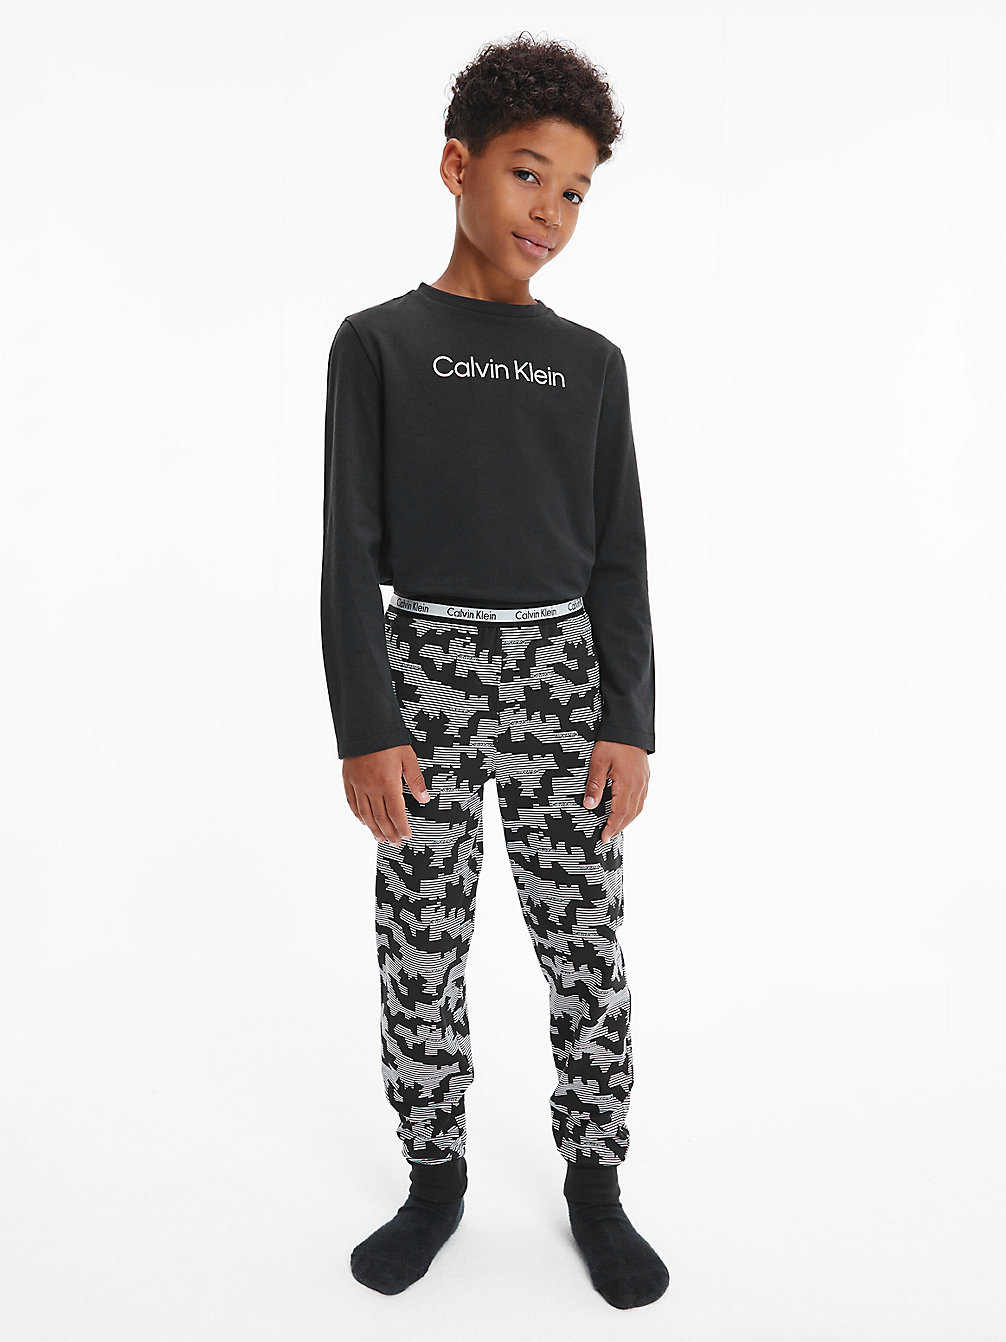 STRIPECAMOBLACKAOP/W/PVHBLACK Pyjama Set - Modern Cotton undefined boys Calvin Klein